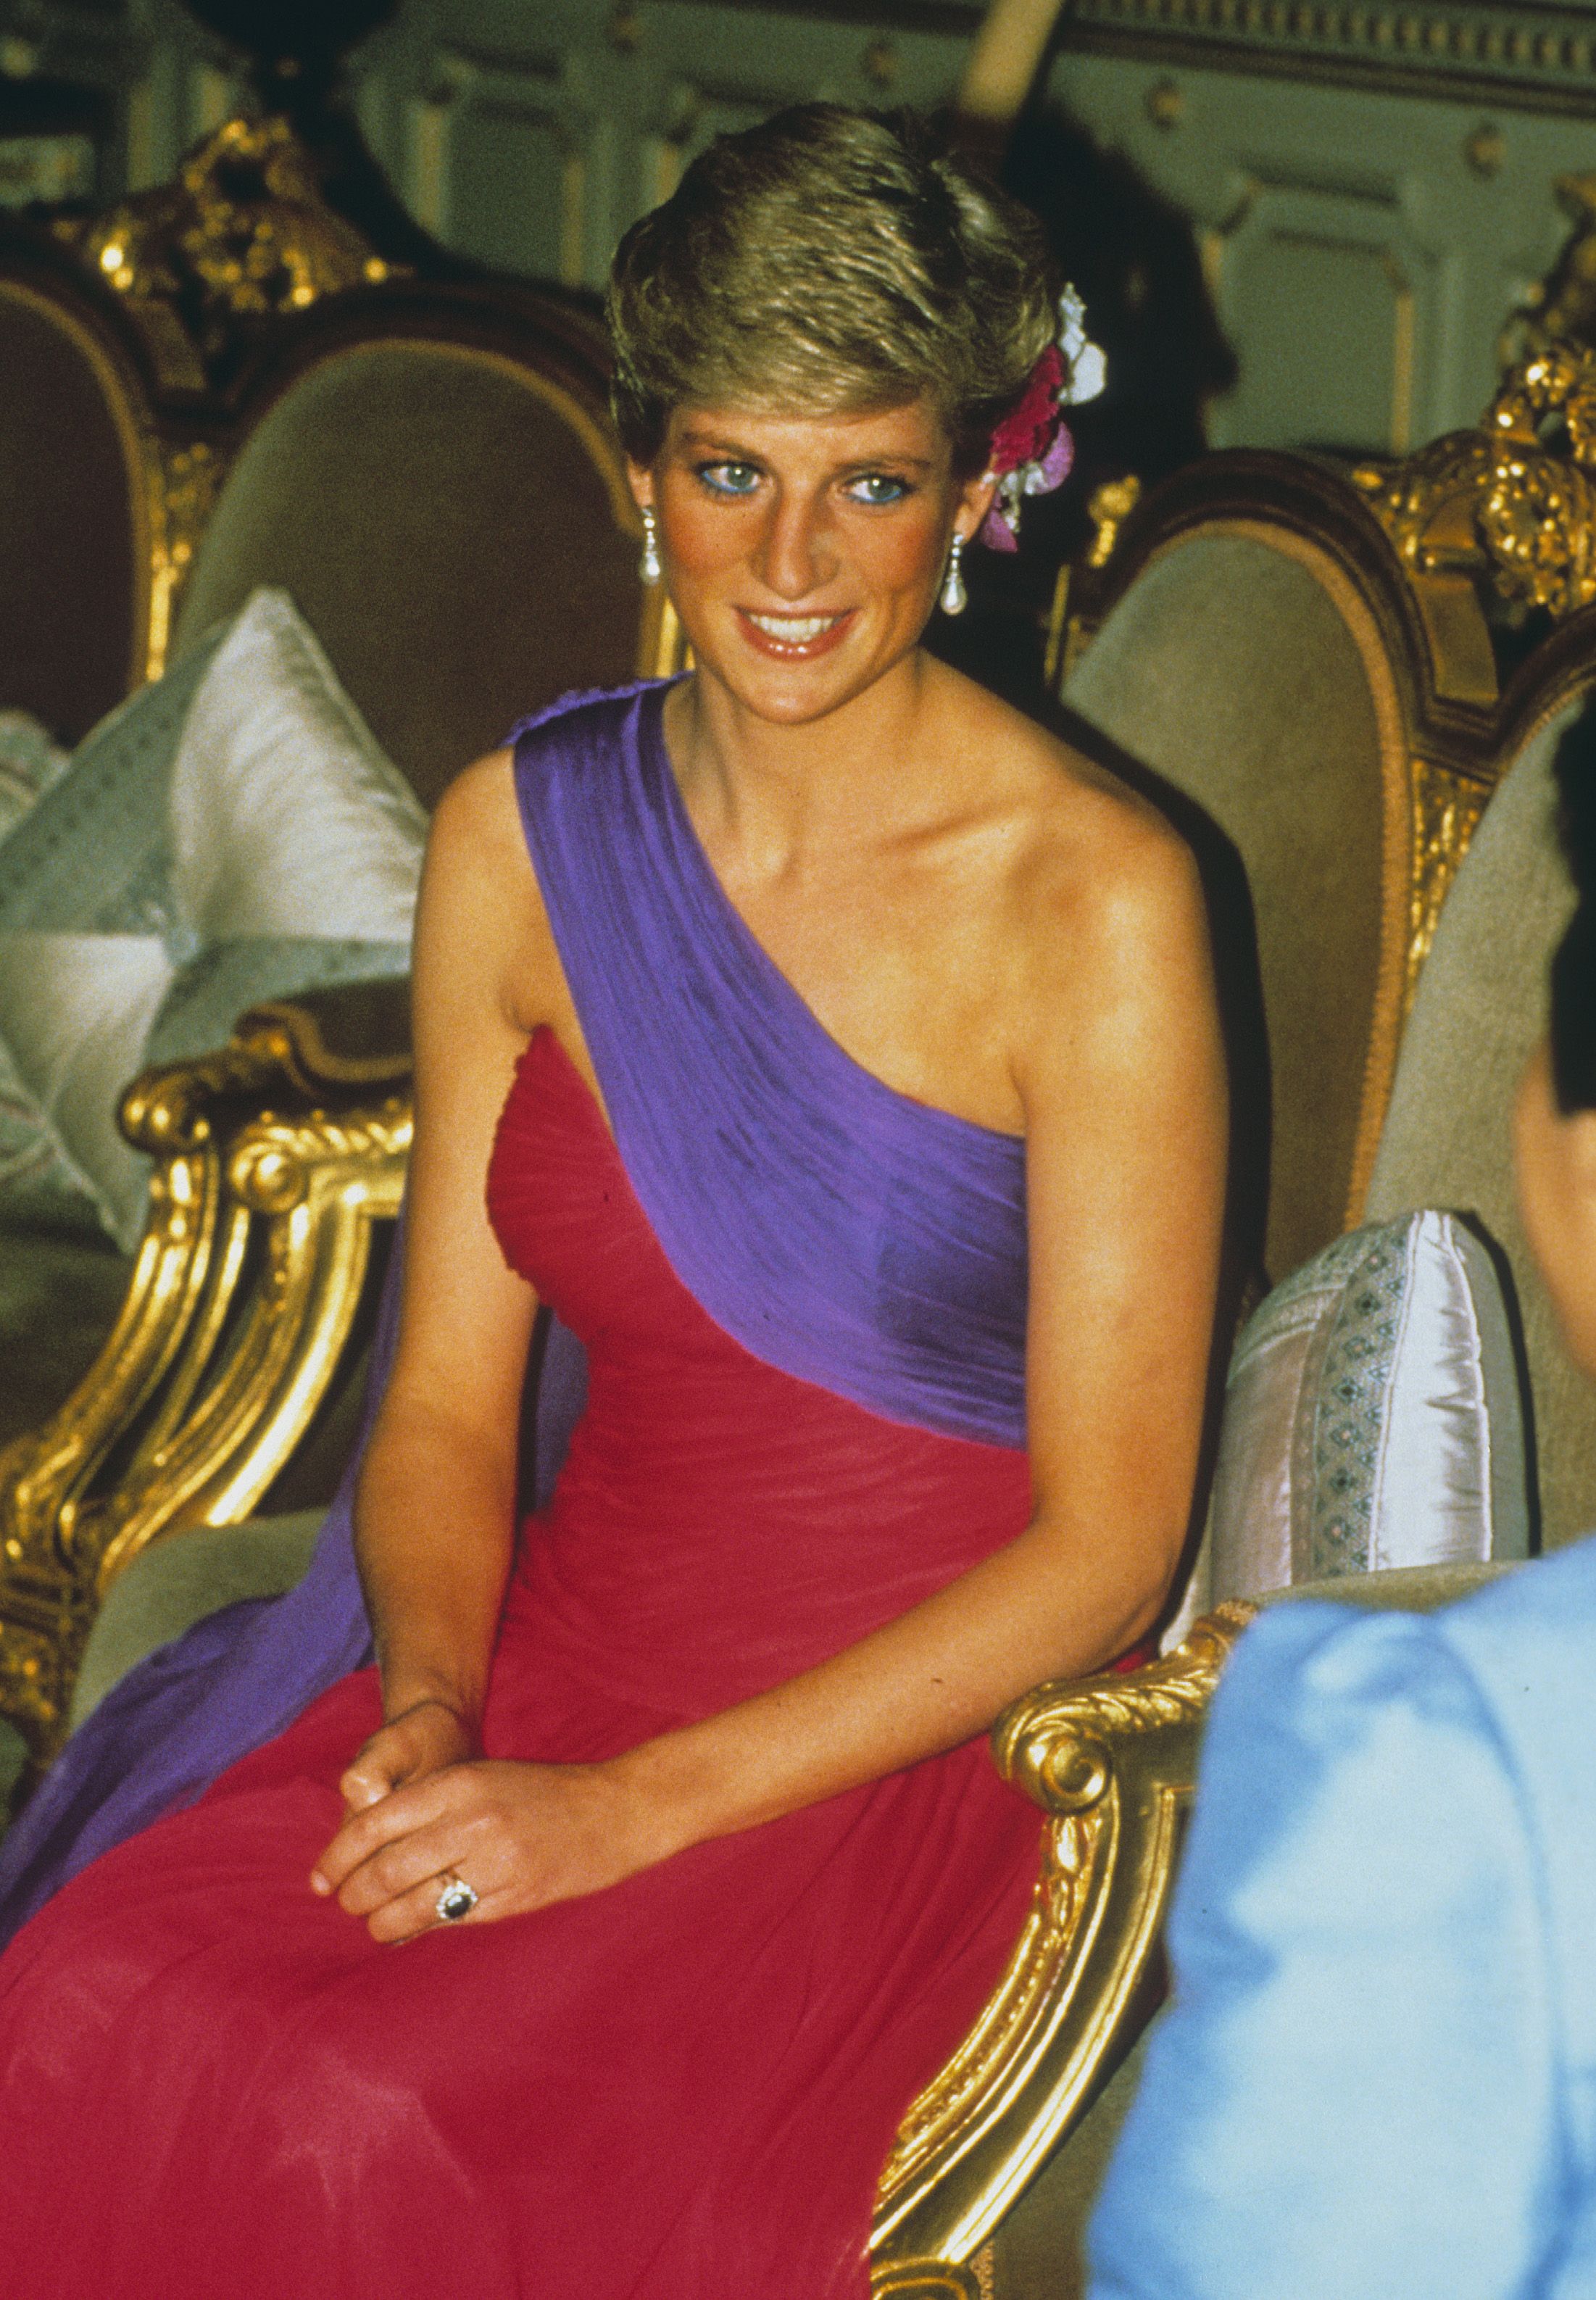 purple coat a tribute to Princess Diana ...